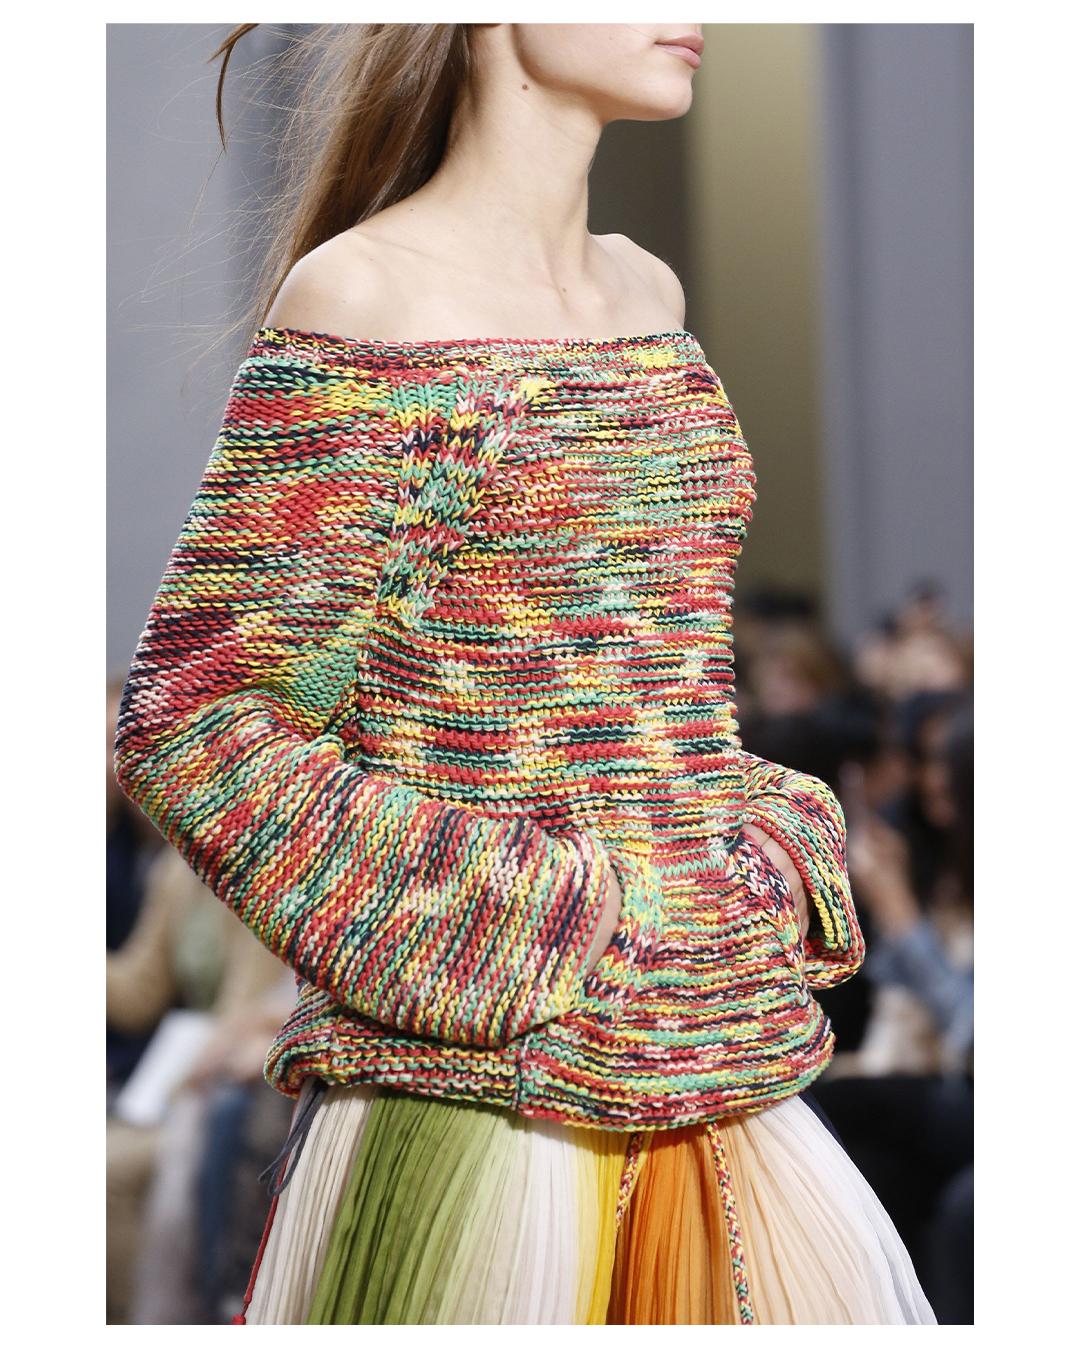 Women's Chloe S/S 2016 oversized chunky knit knitted orange rainbow slouch sweater